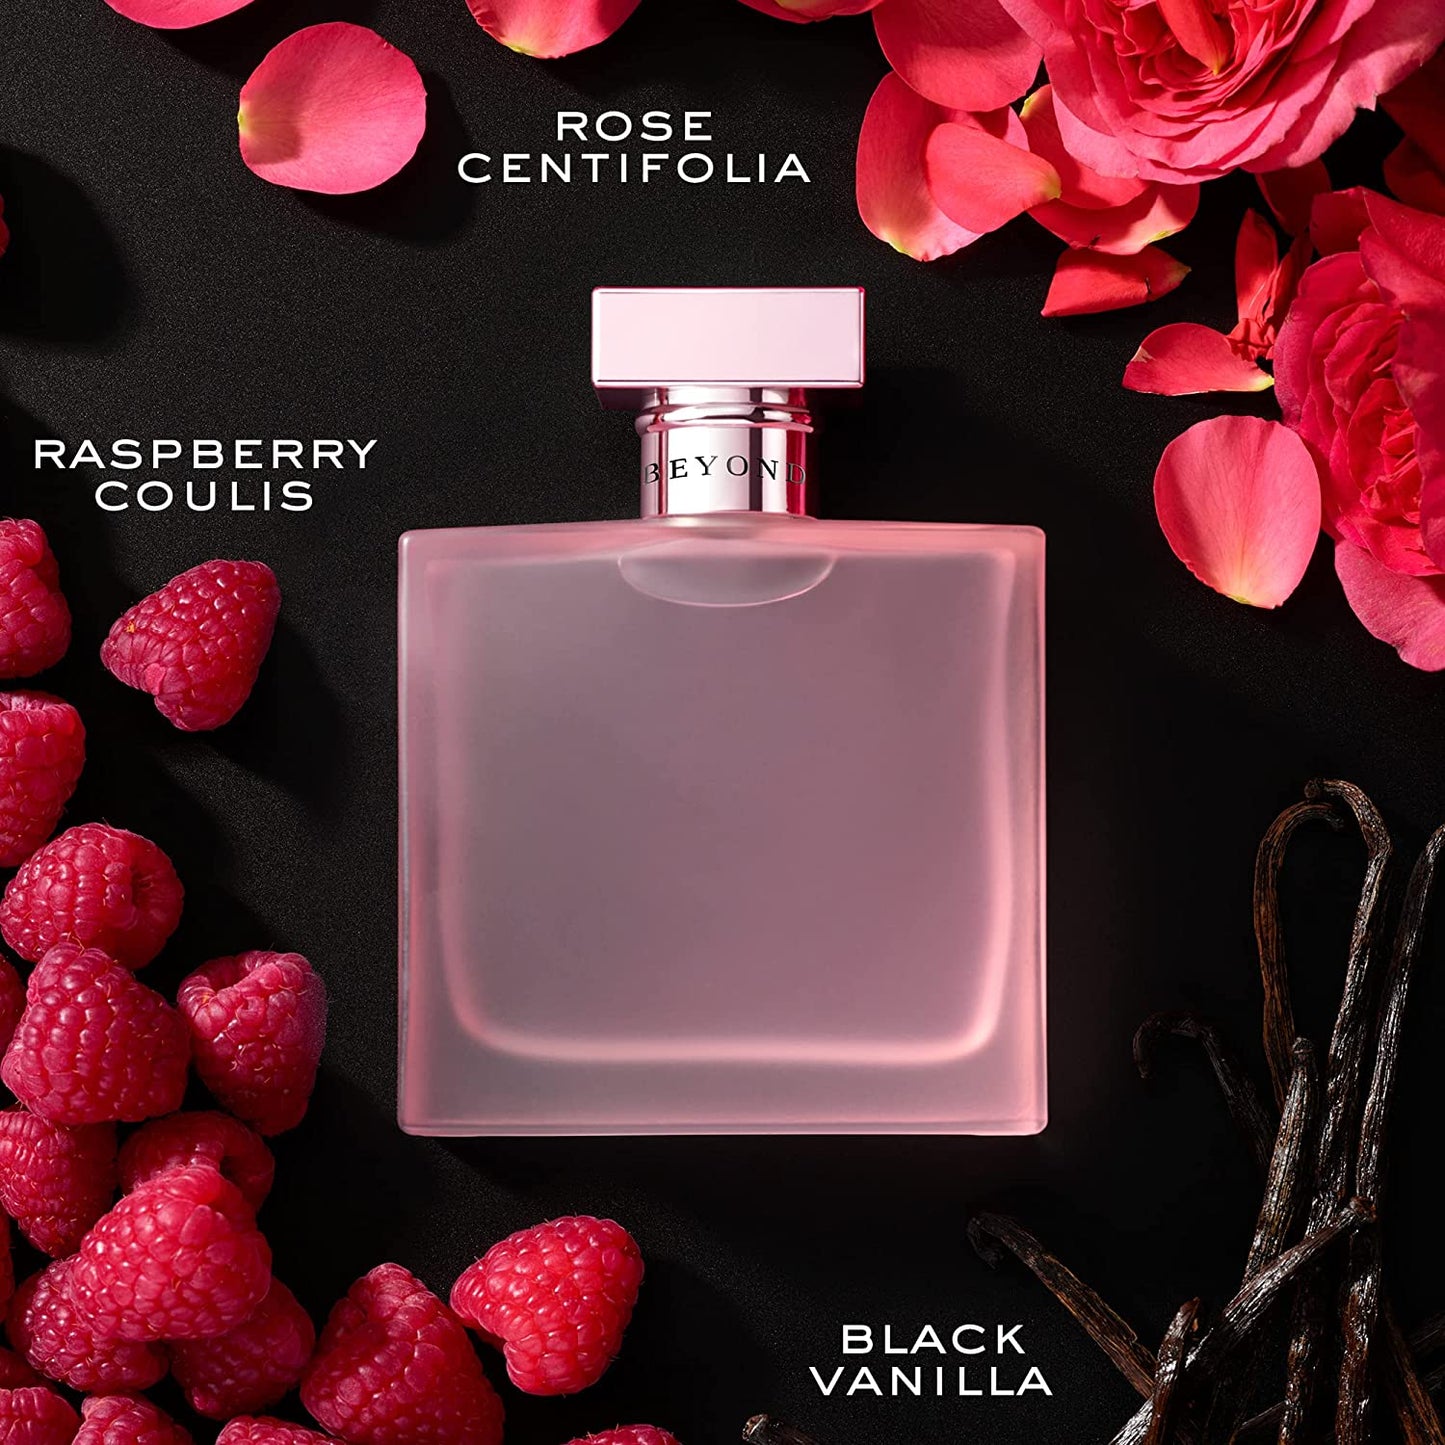 Ralph Lauren - Romance - Eau de Parfum - Women's Perfume - Floral & Woody -  With Rose, Jasmine, and Berries - Medium Intensity